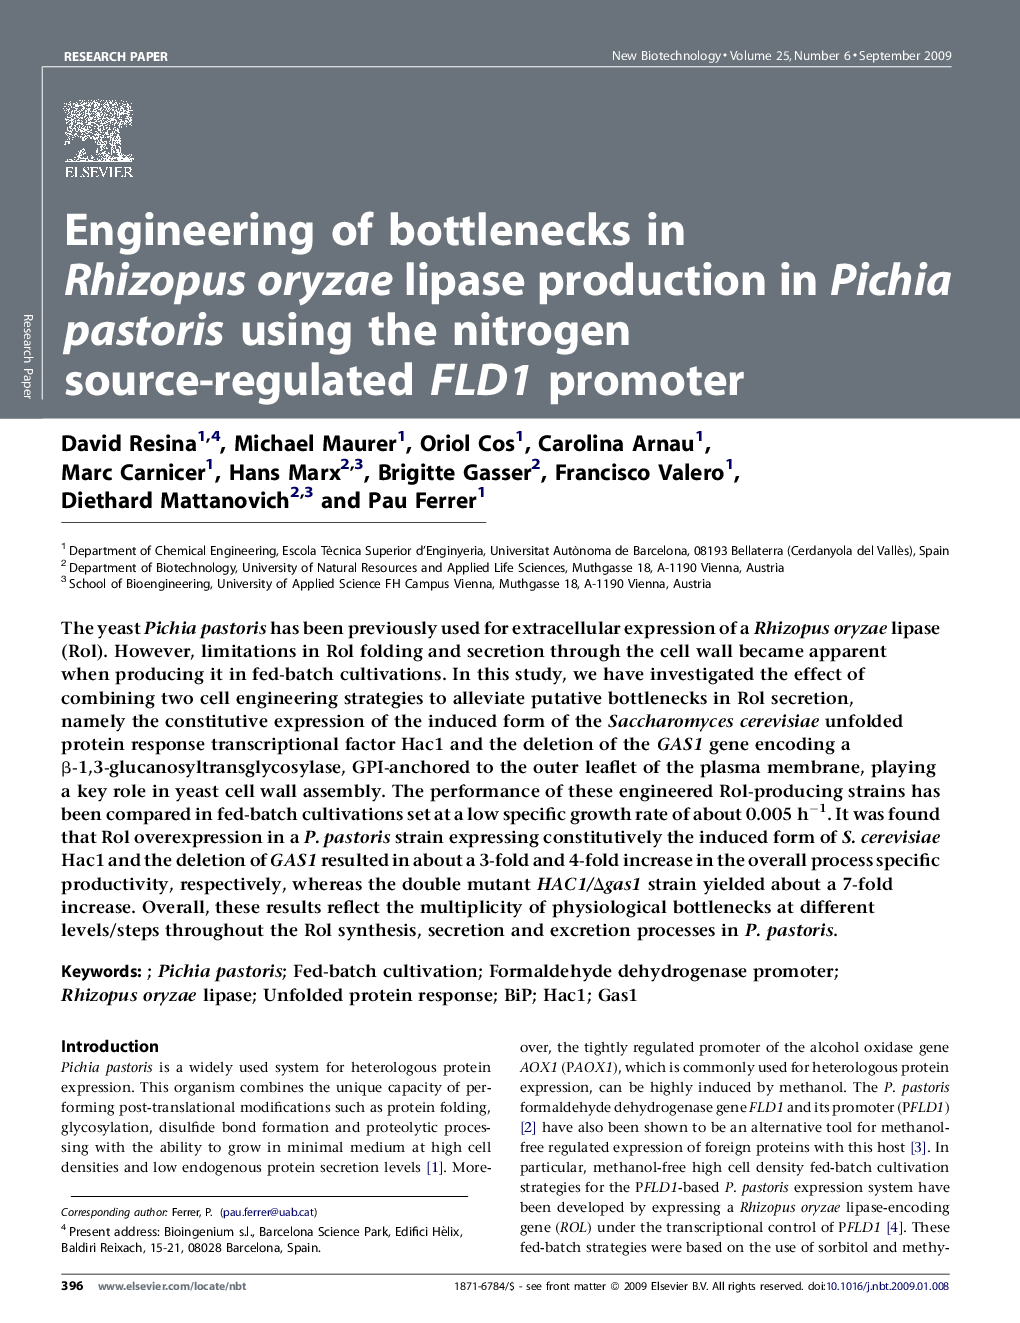 Engineering of bottlenecks in Rhizopus oryzae lipase production in Pichia pastoris using the nitrogen source-regulated FLD1 promoter